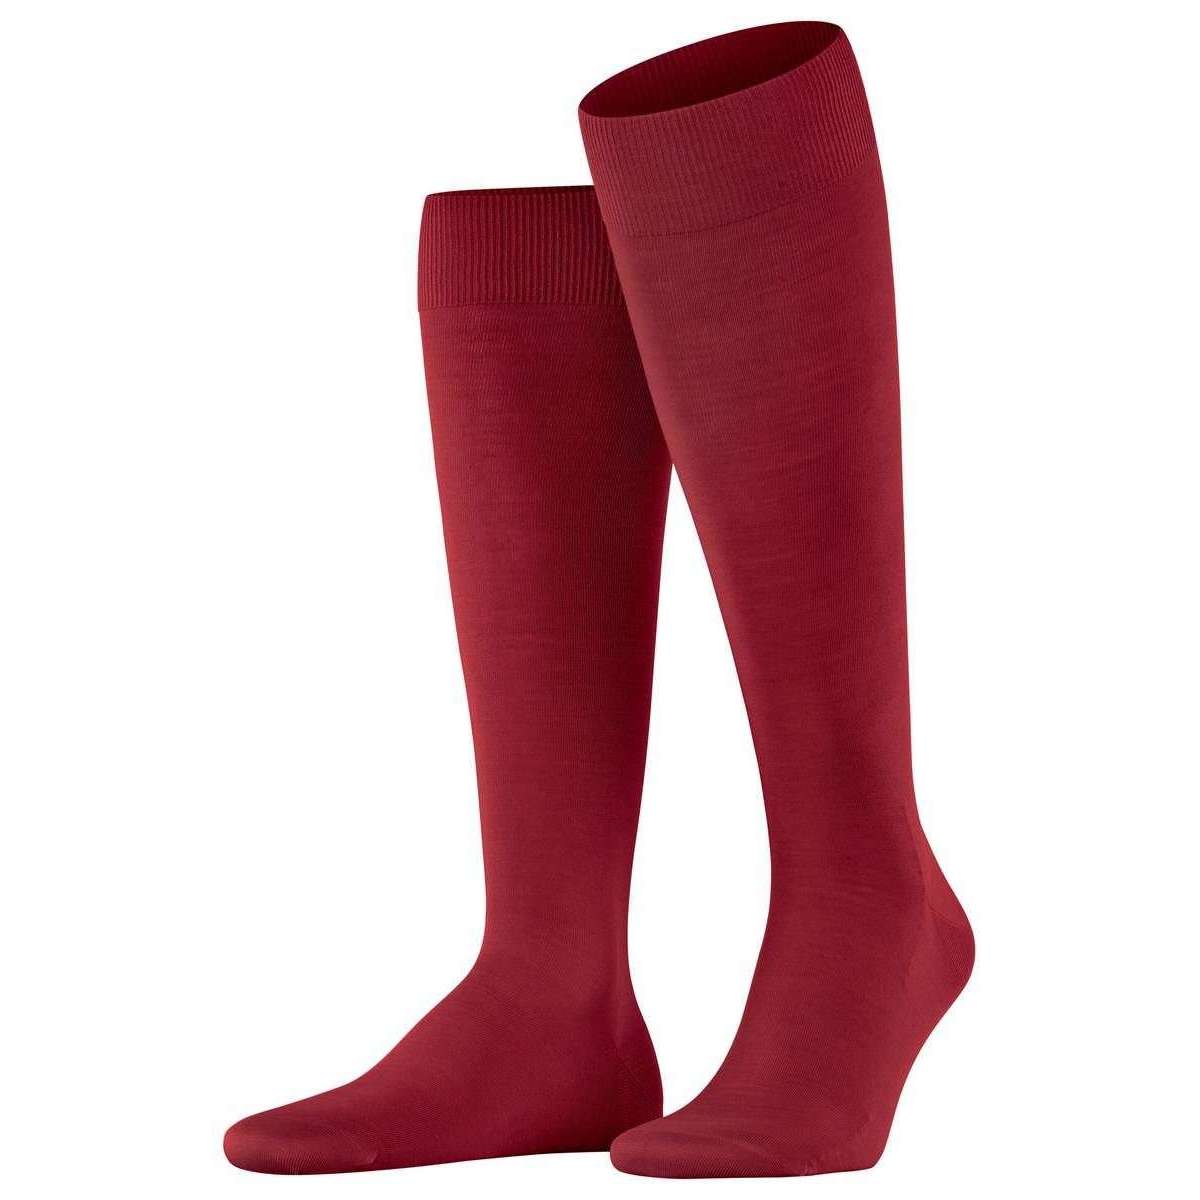 Falke Climawool Knee High Socks - Scarlet Red